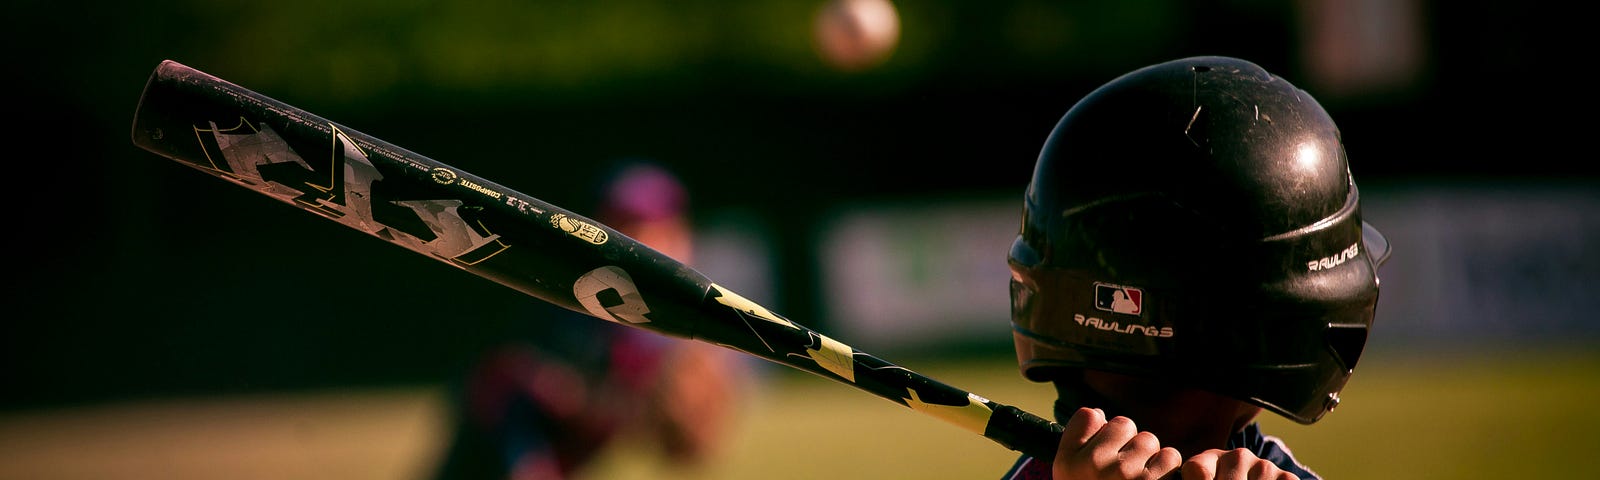 A young baseball player is up at bat.